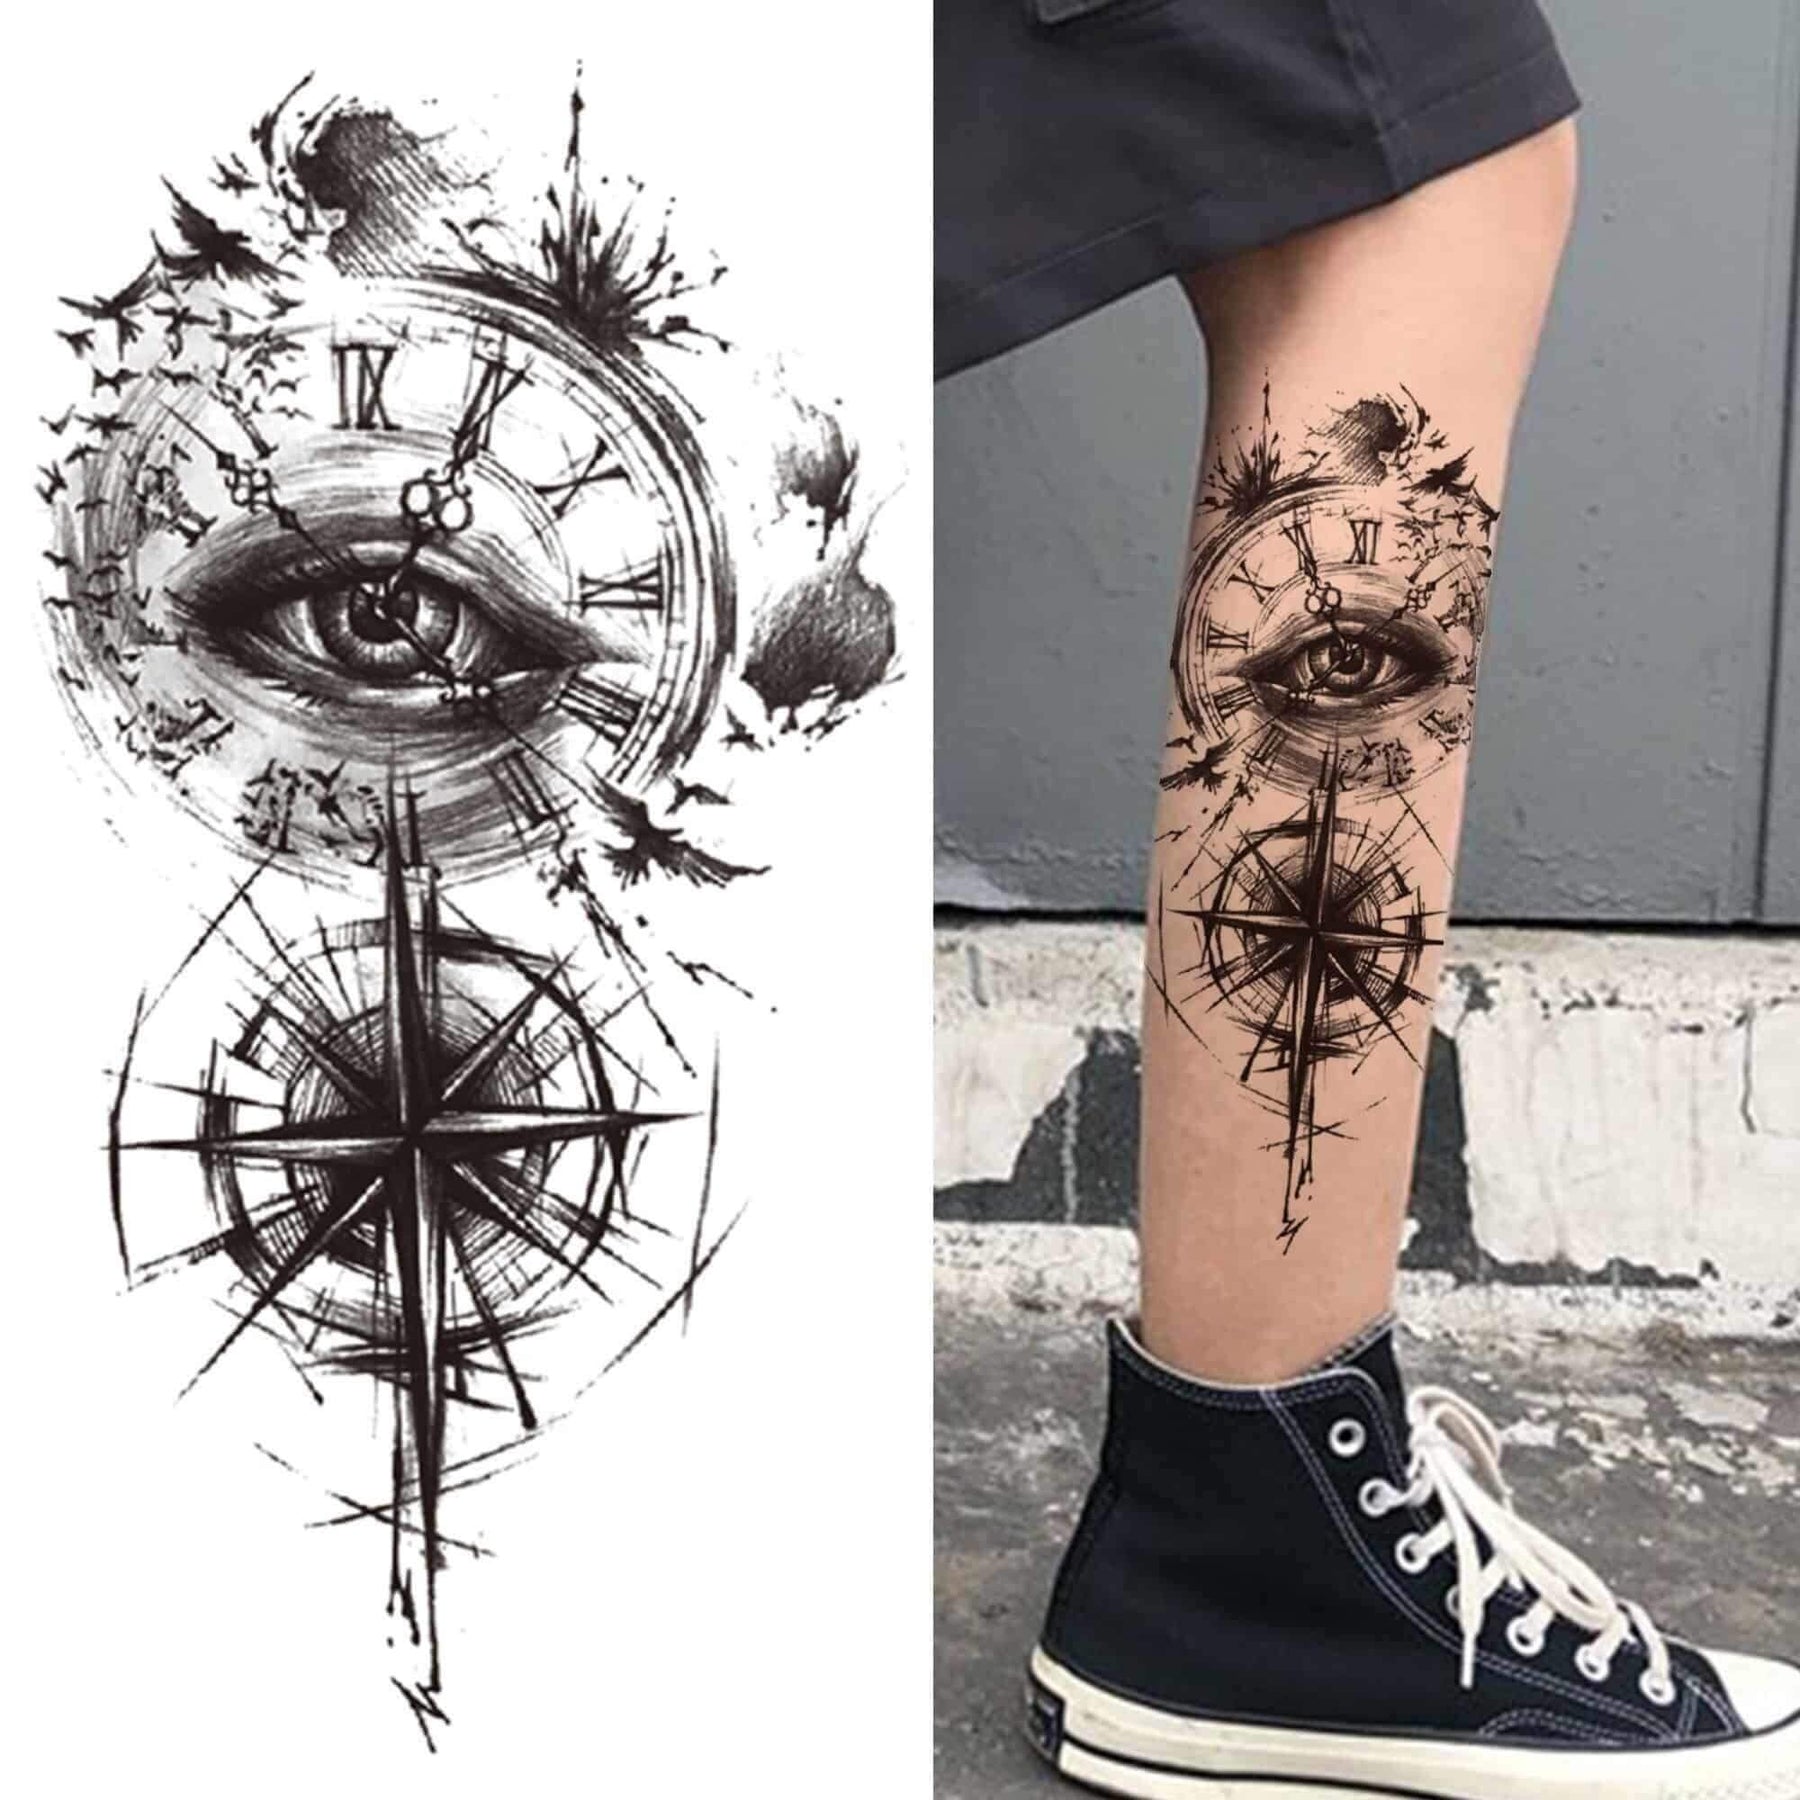 Tattoo of Knee Compass rose